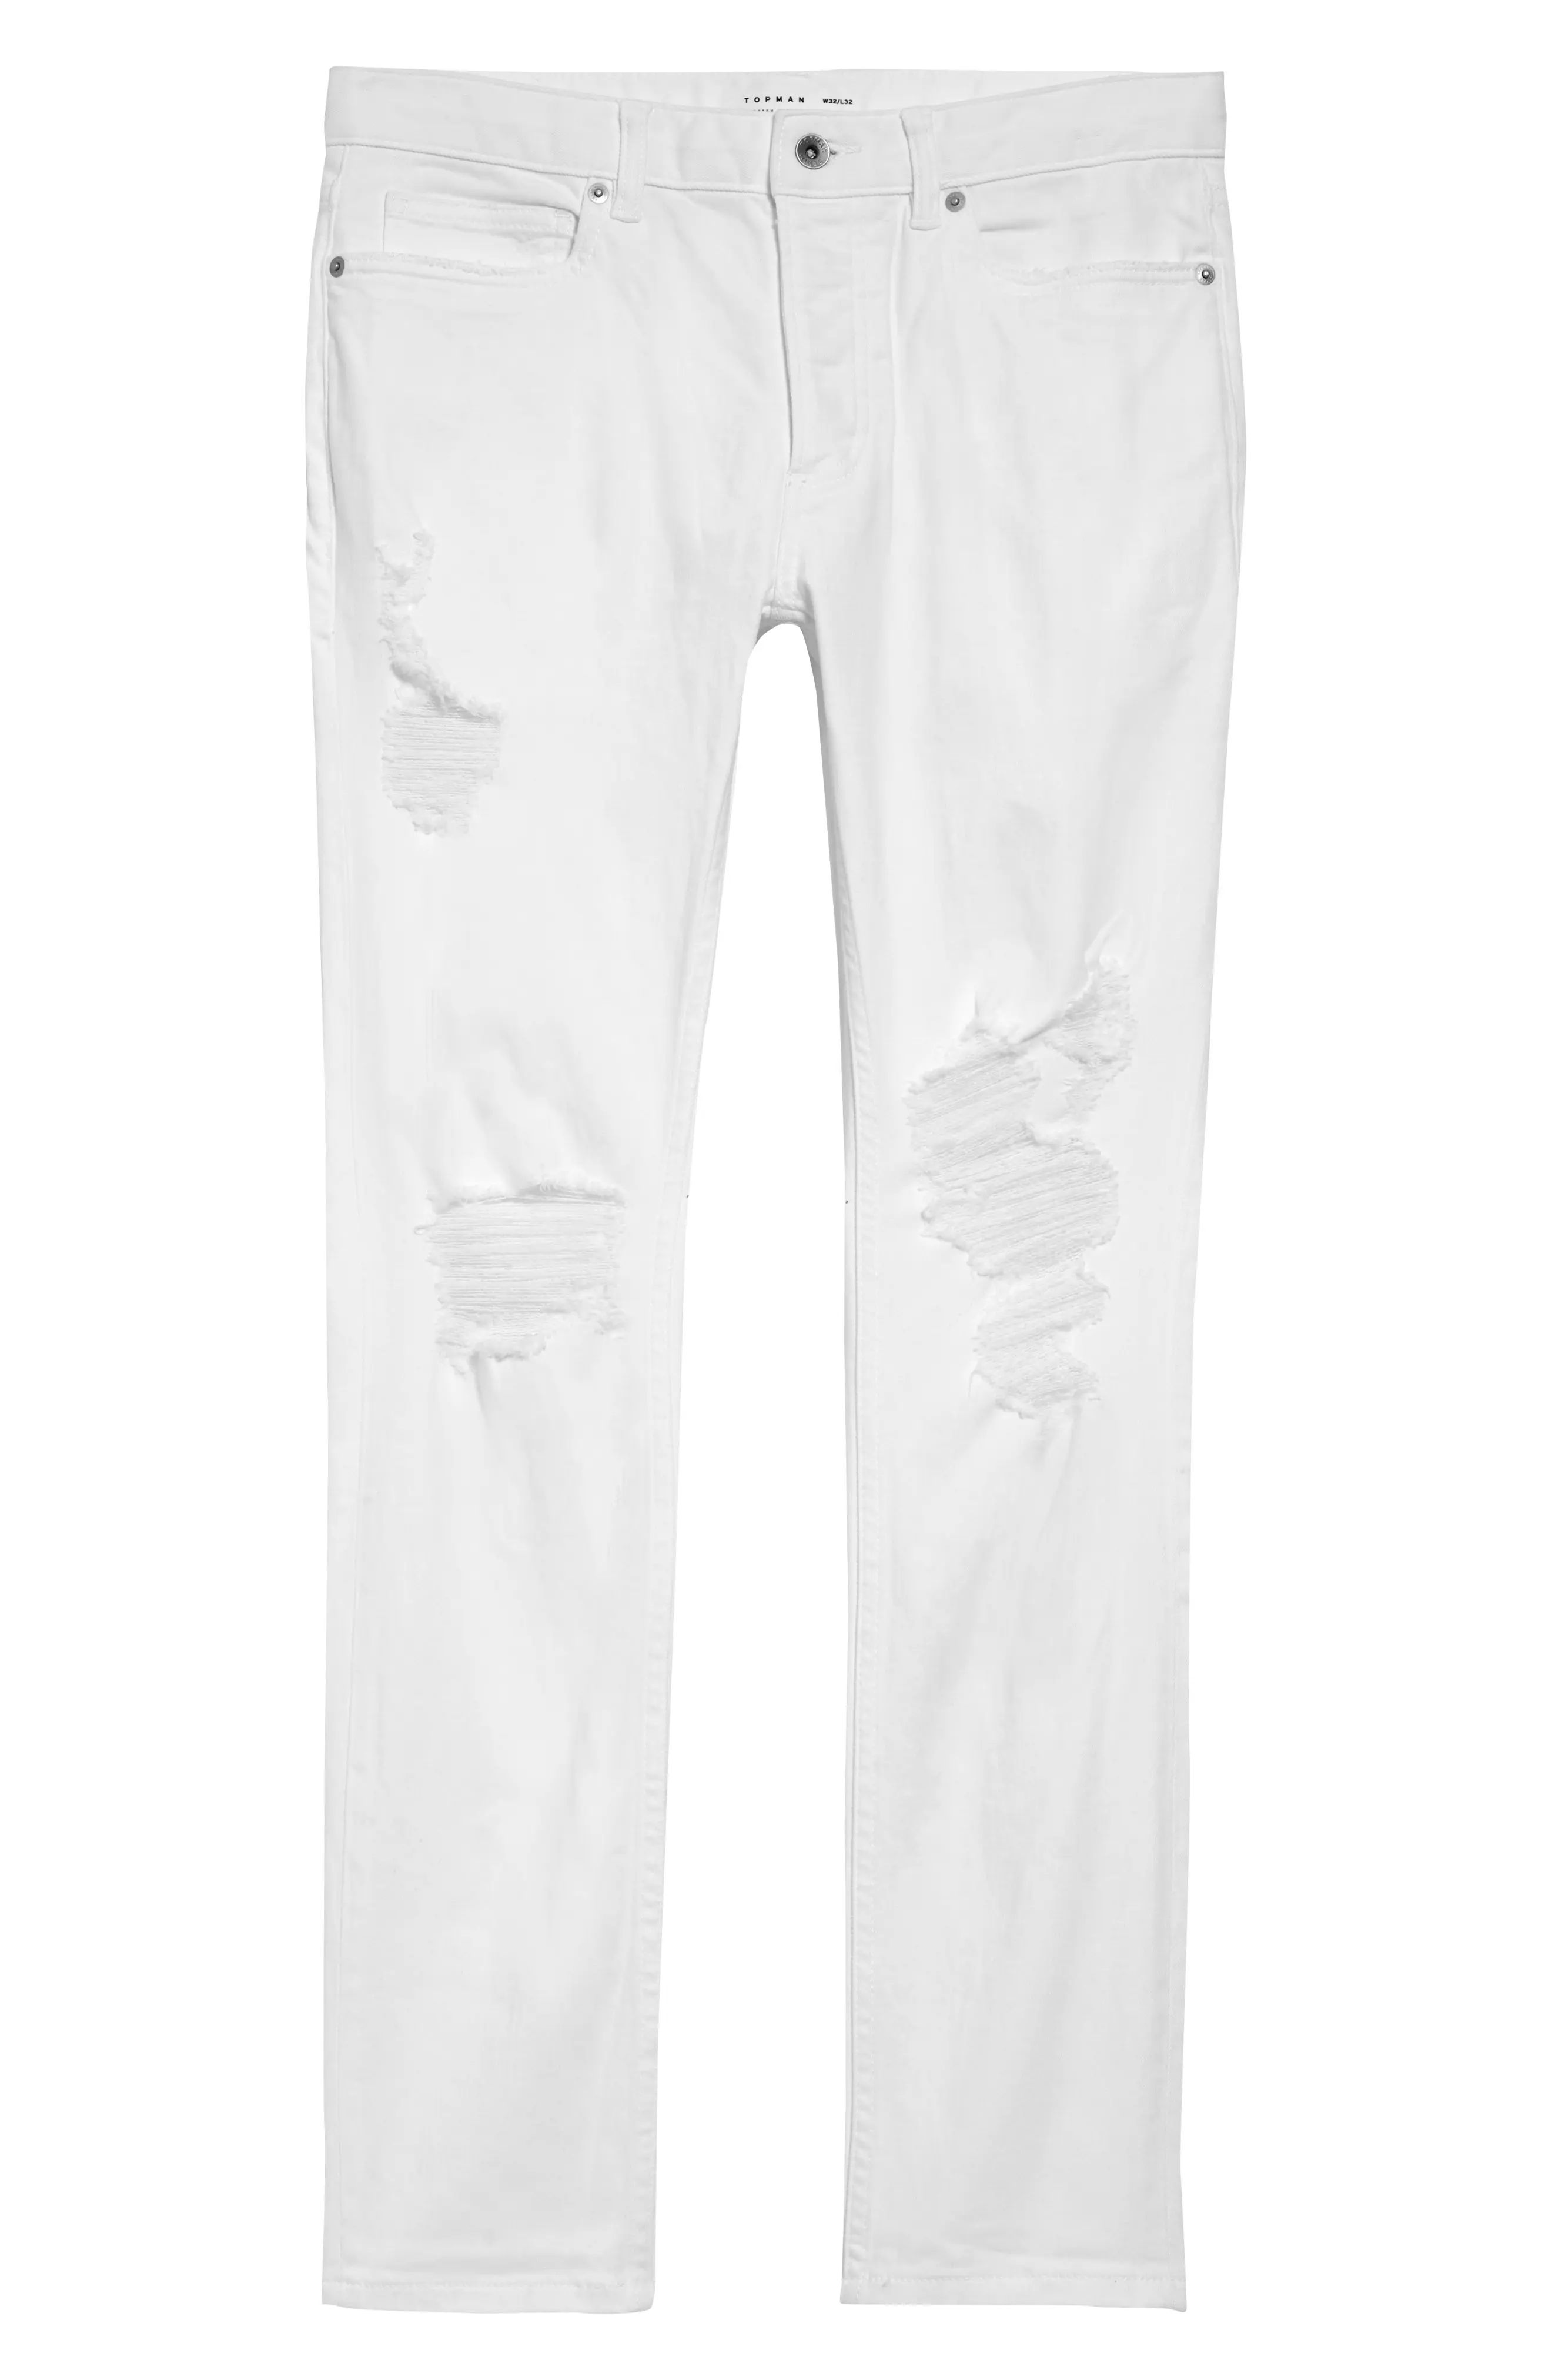 Men's Topman Ripped Skinny Jeans, Size 32 x 34 - White | Nordstrom